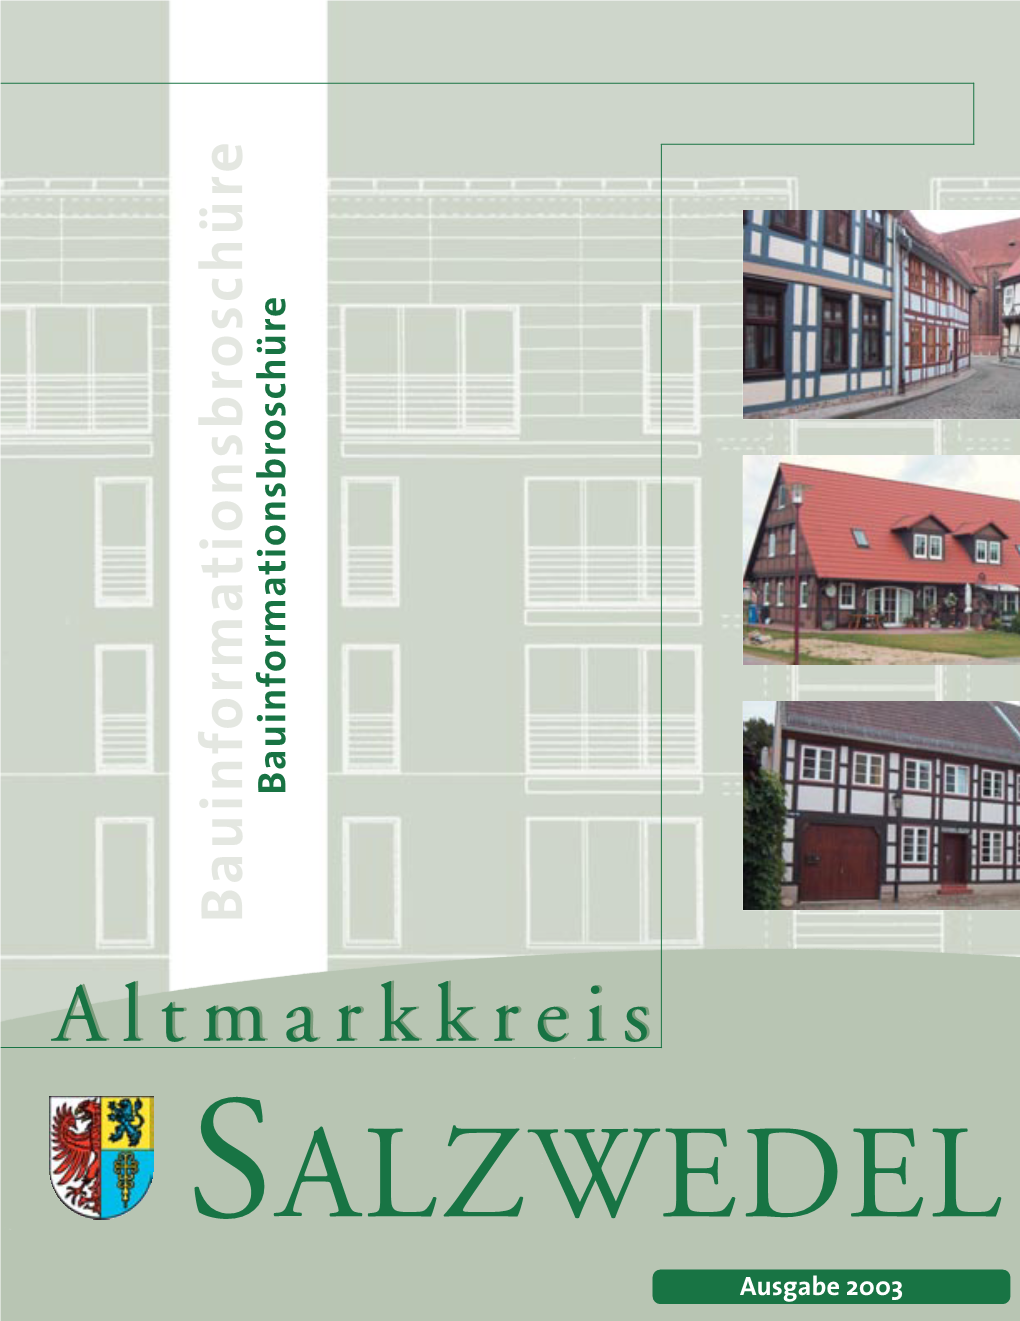 Grundstücke in Salzwedel G EWERBE- UND 48 W OHNGRUNDSTÜCKE in S ALZWEDEL Gewerbe- Und Wohn- Grundstücke in Salzwedel